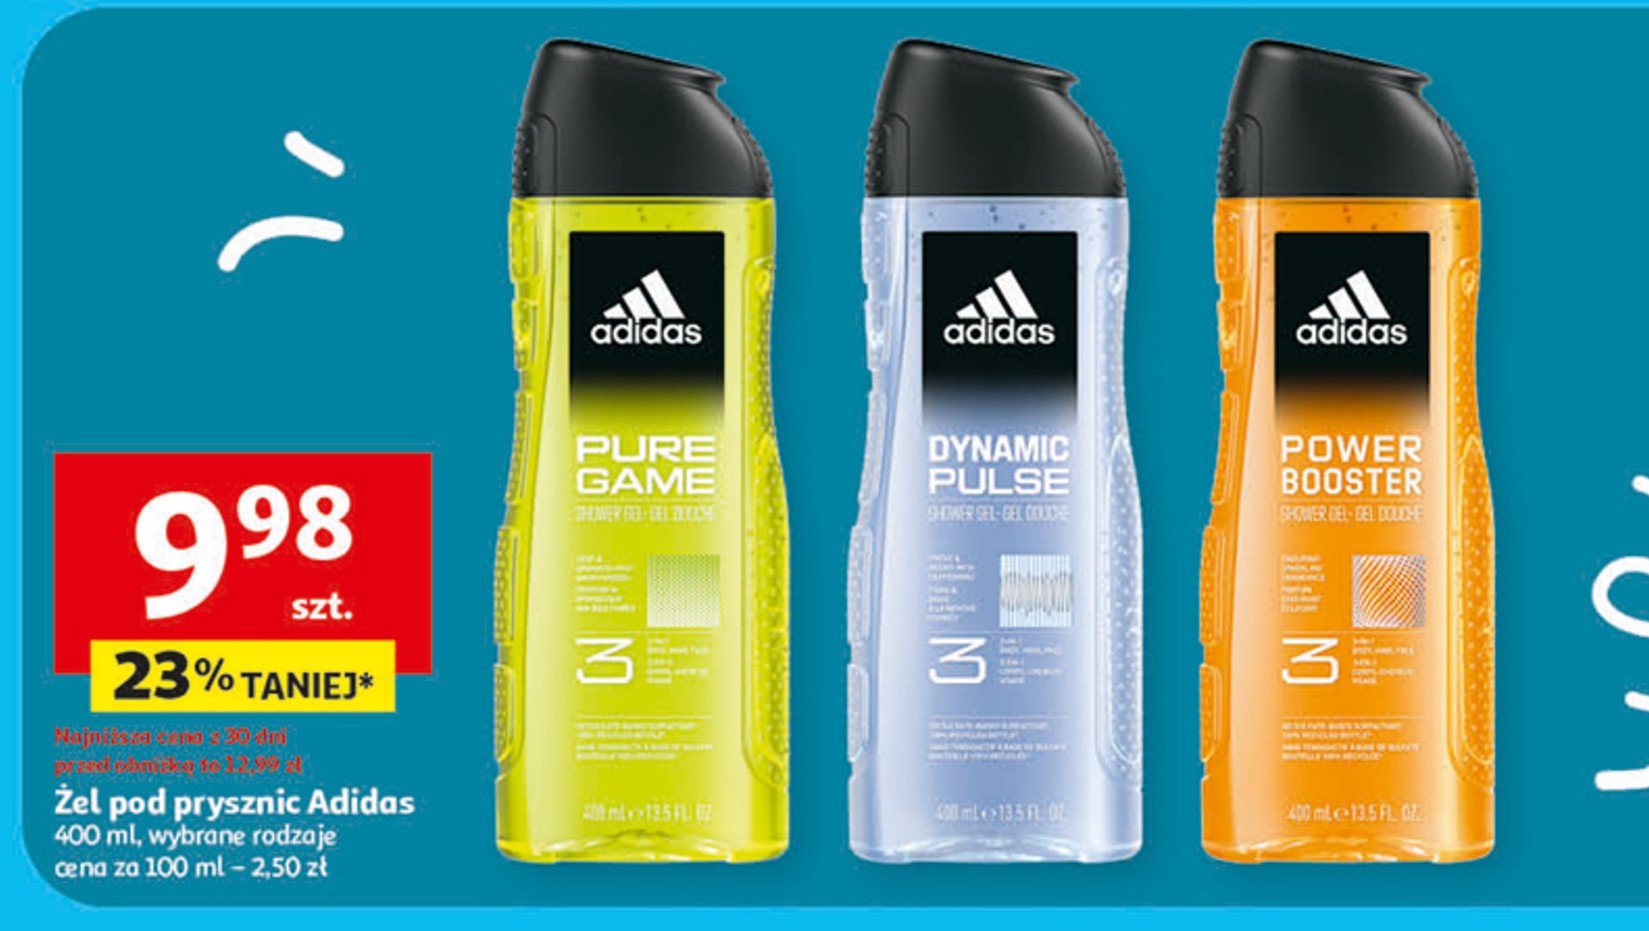 Żel pod prysznic Adidas men dynamic pulse Adidas cosmetics promocja